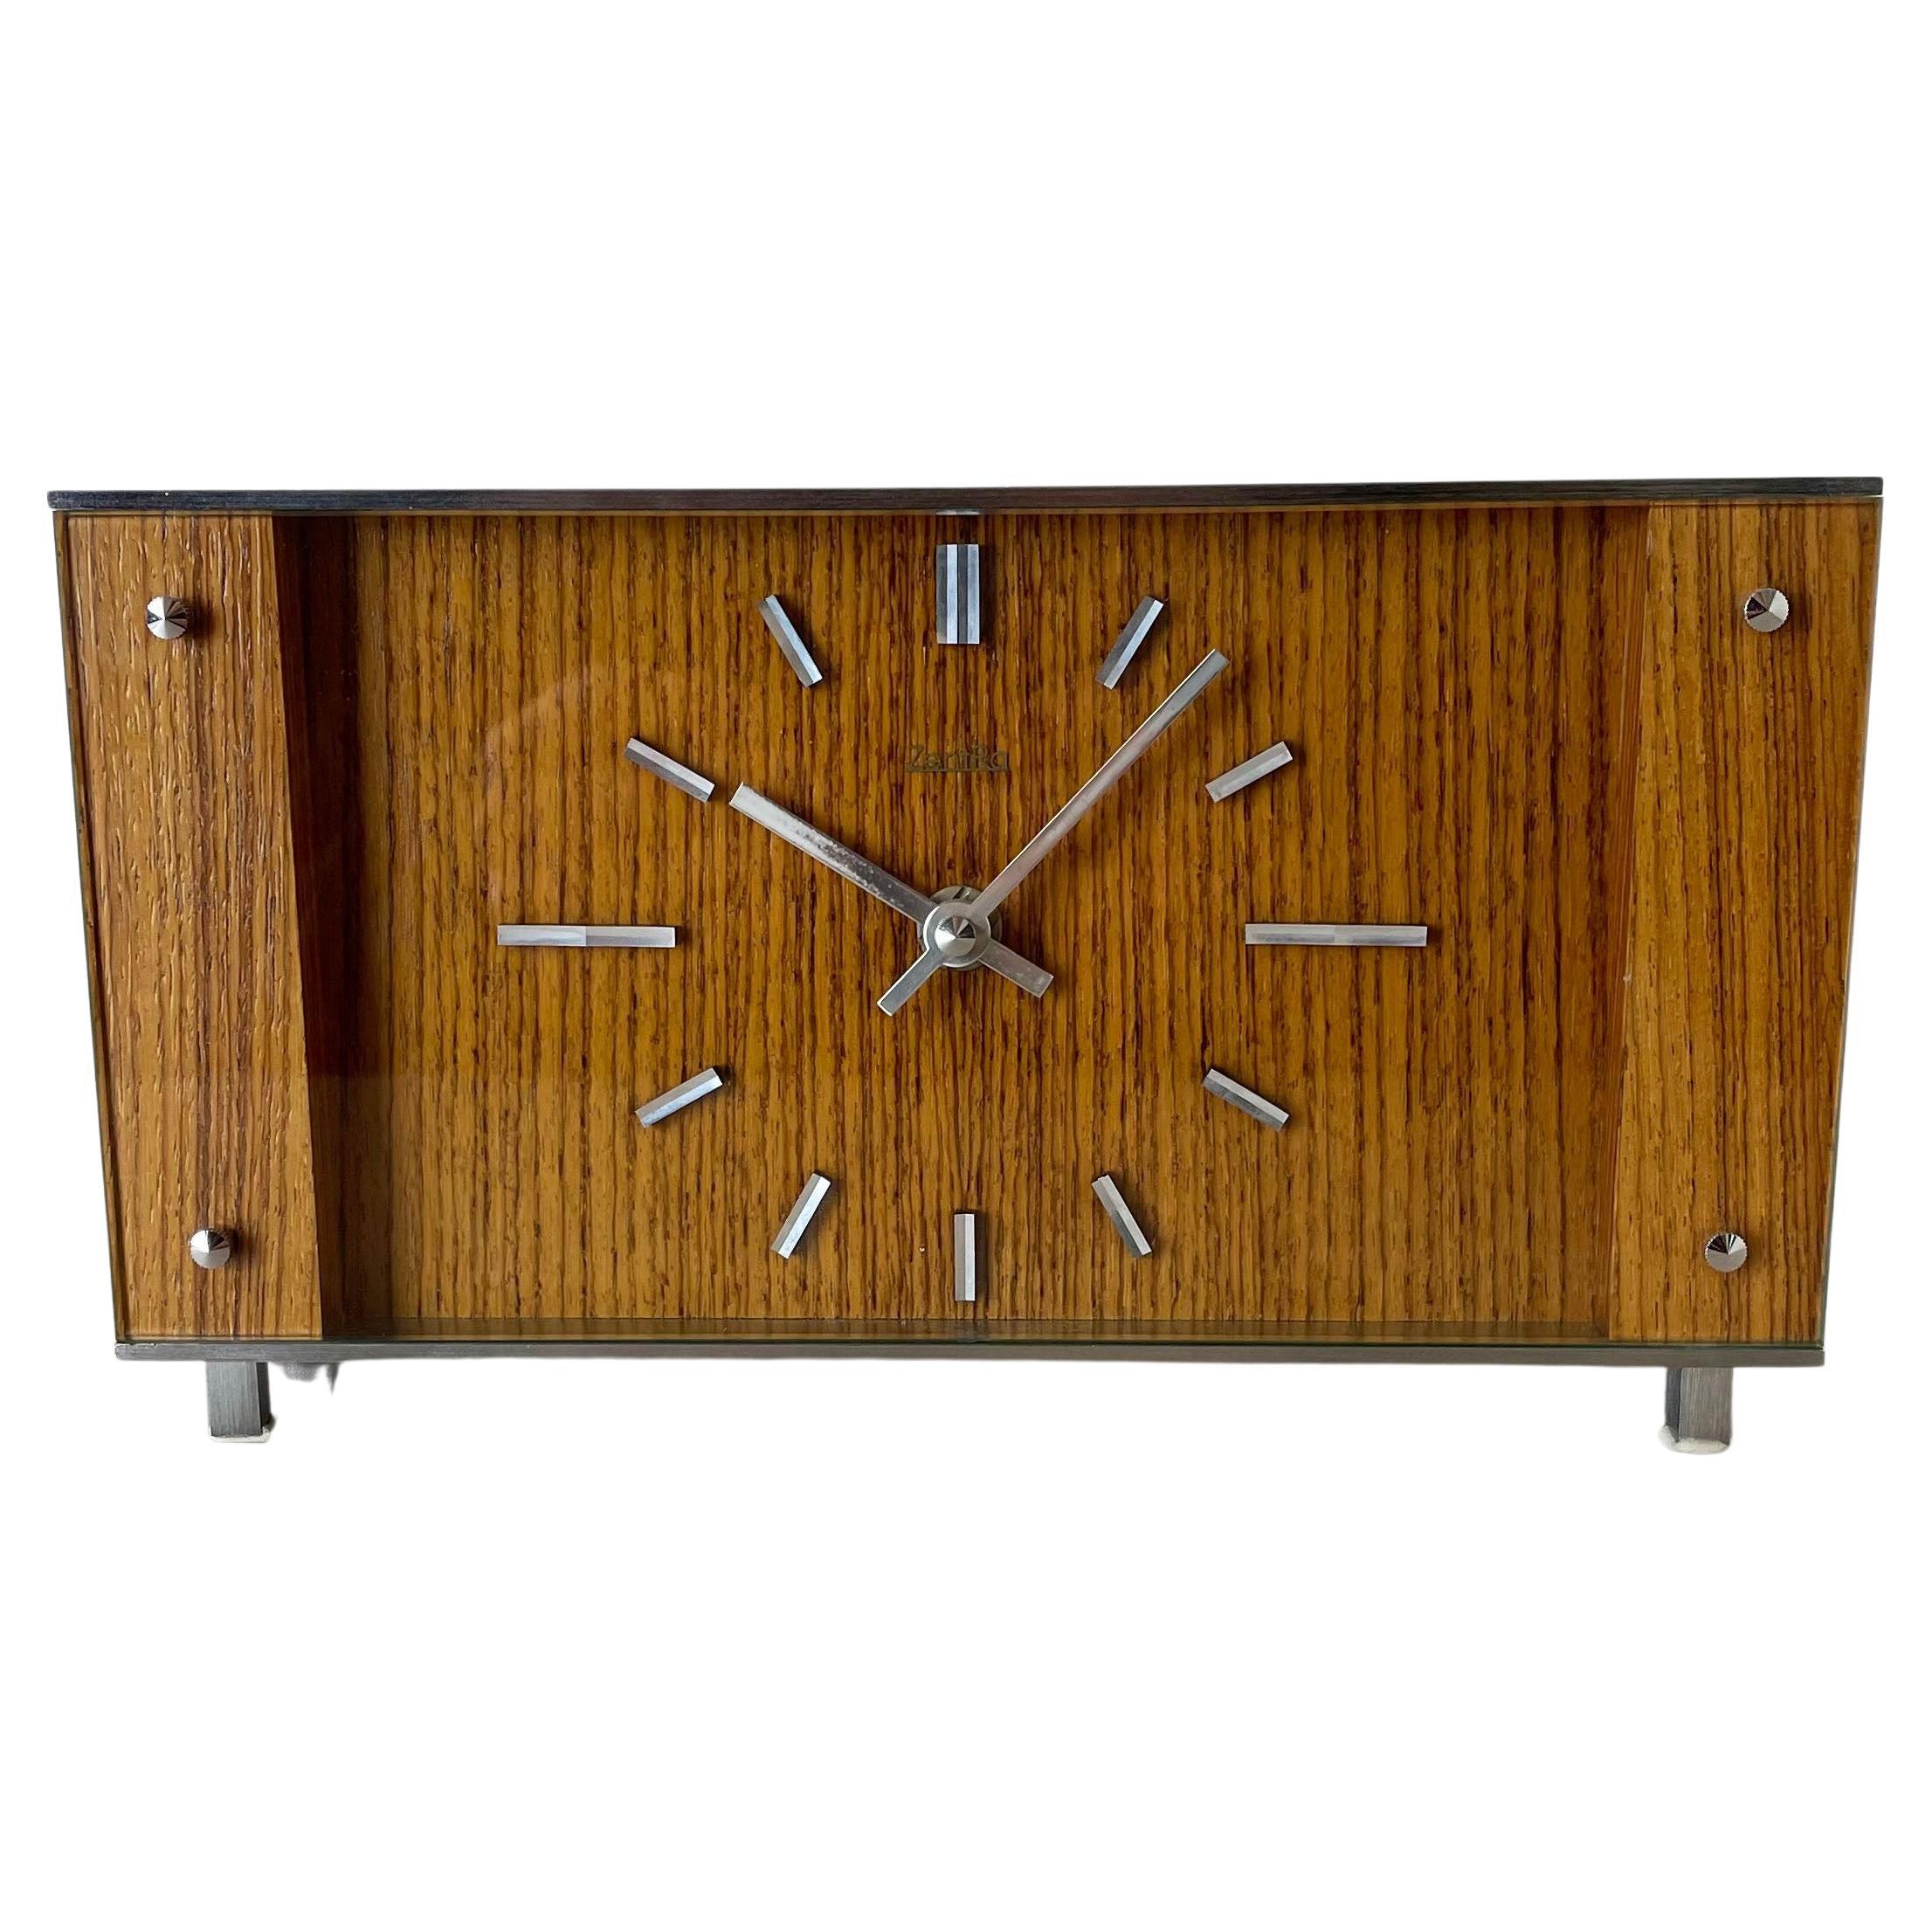 Vintage Modernist Wooden Teak Metal Table Clock by Zentra, Germany 1970s For Sale